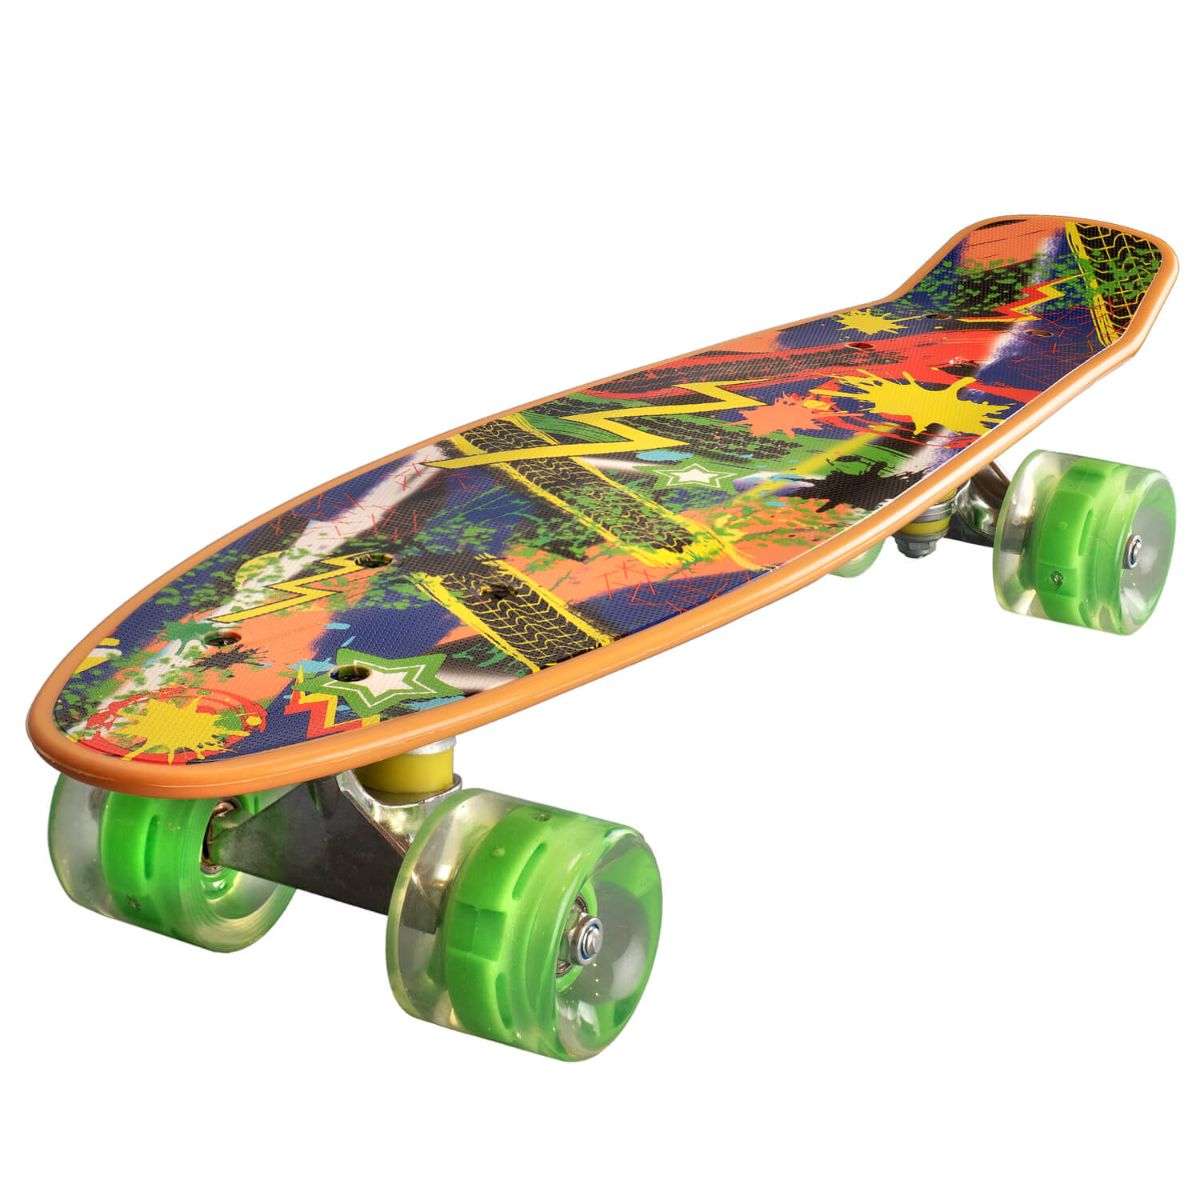 Penny board Landsurfer, Cu roti luminoase, 56 cm, ABEC-7 PU, Aluminium 90 kg, Splash Role si skateboard imagine 2022